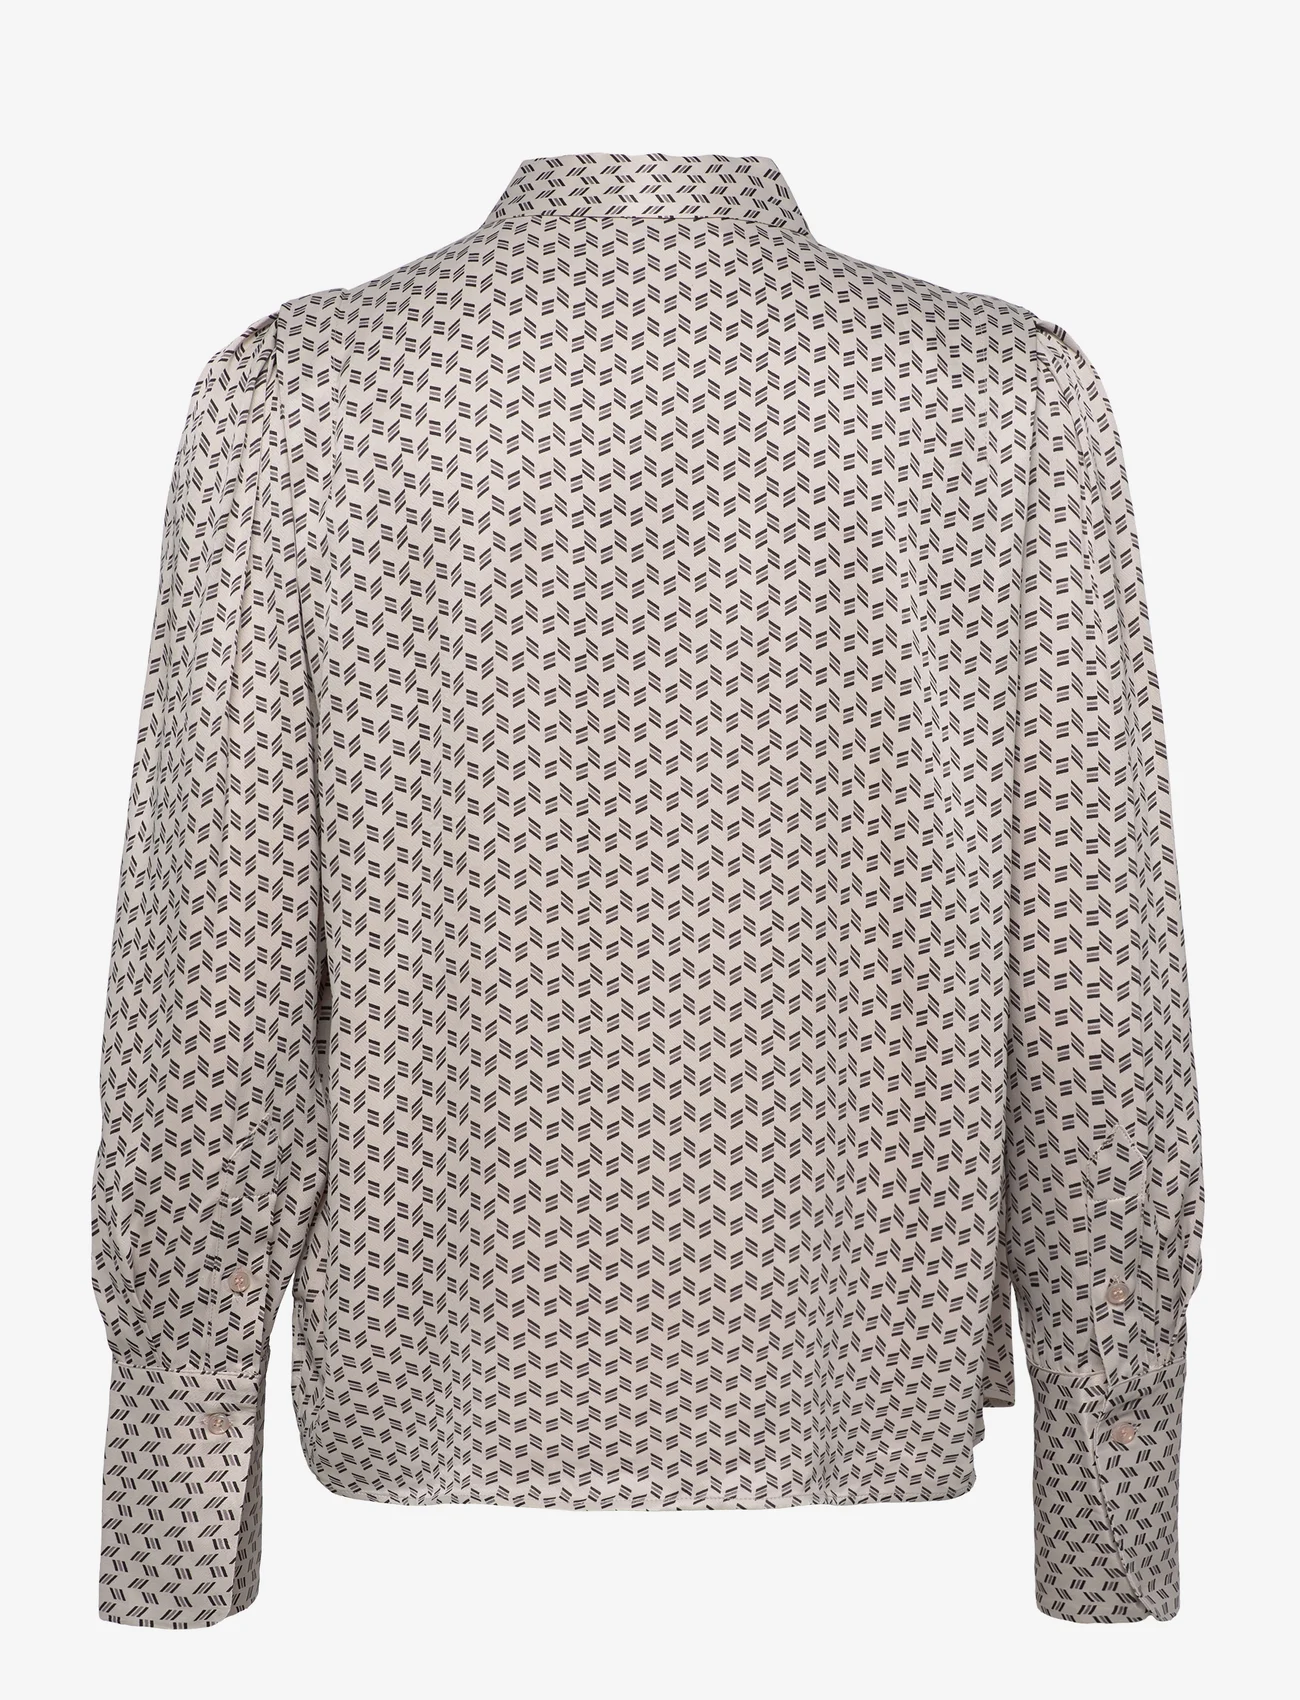 Levete Room - LR-VIDA - long-sleeved shirts - l901c - chateau gray combi - 1